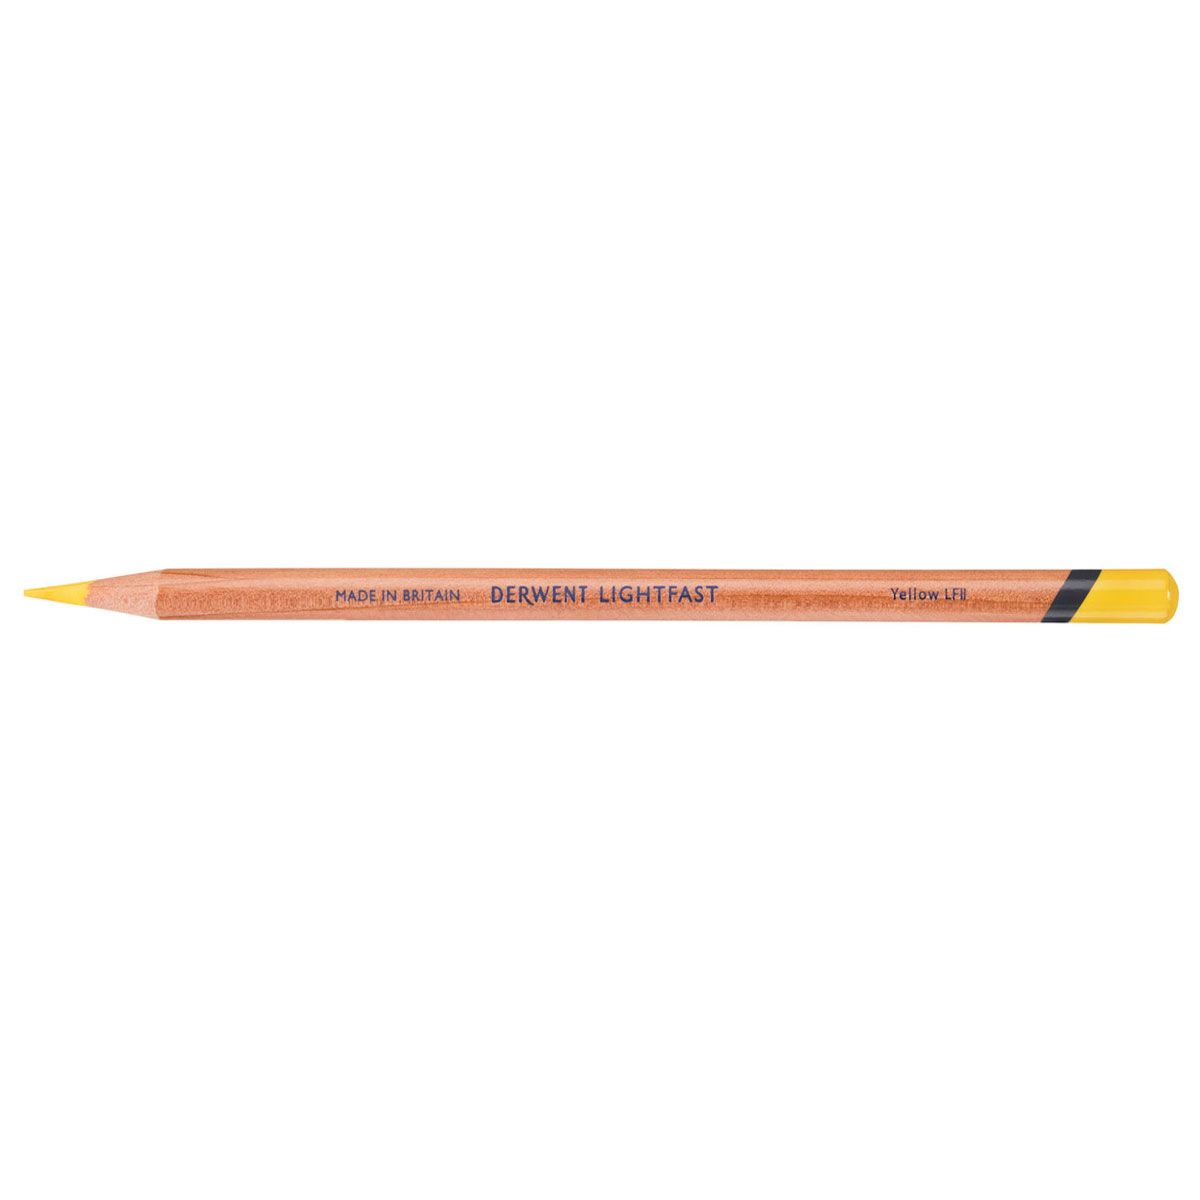 NEW Derwent Lightfast Pencil Colour: Yellow